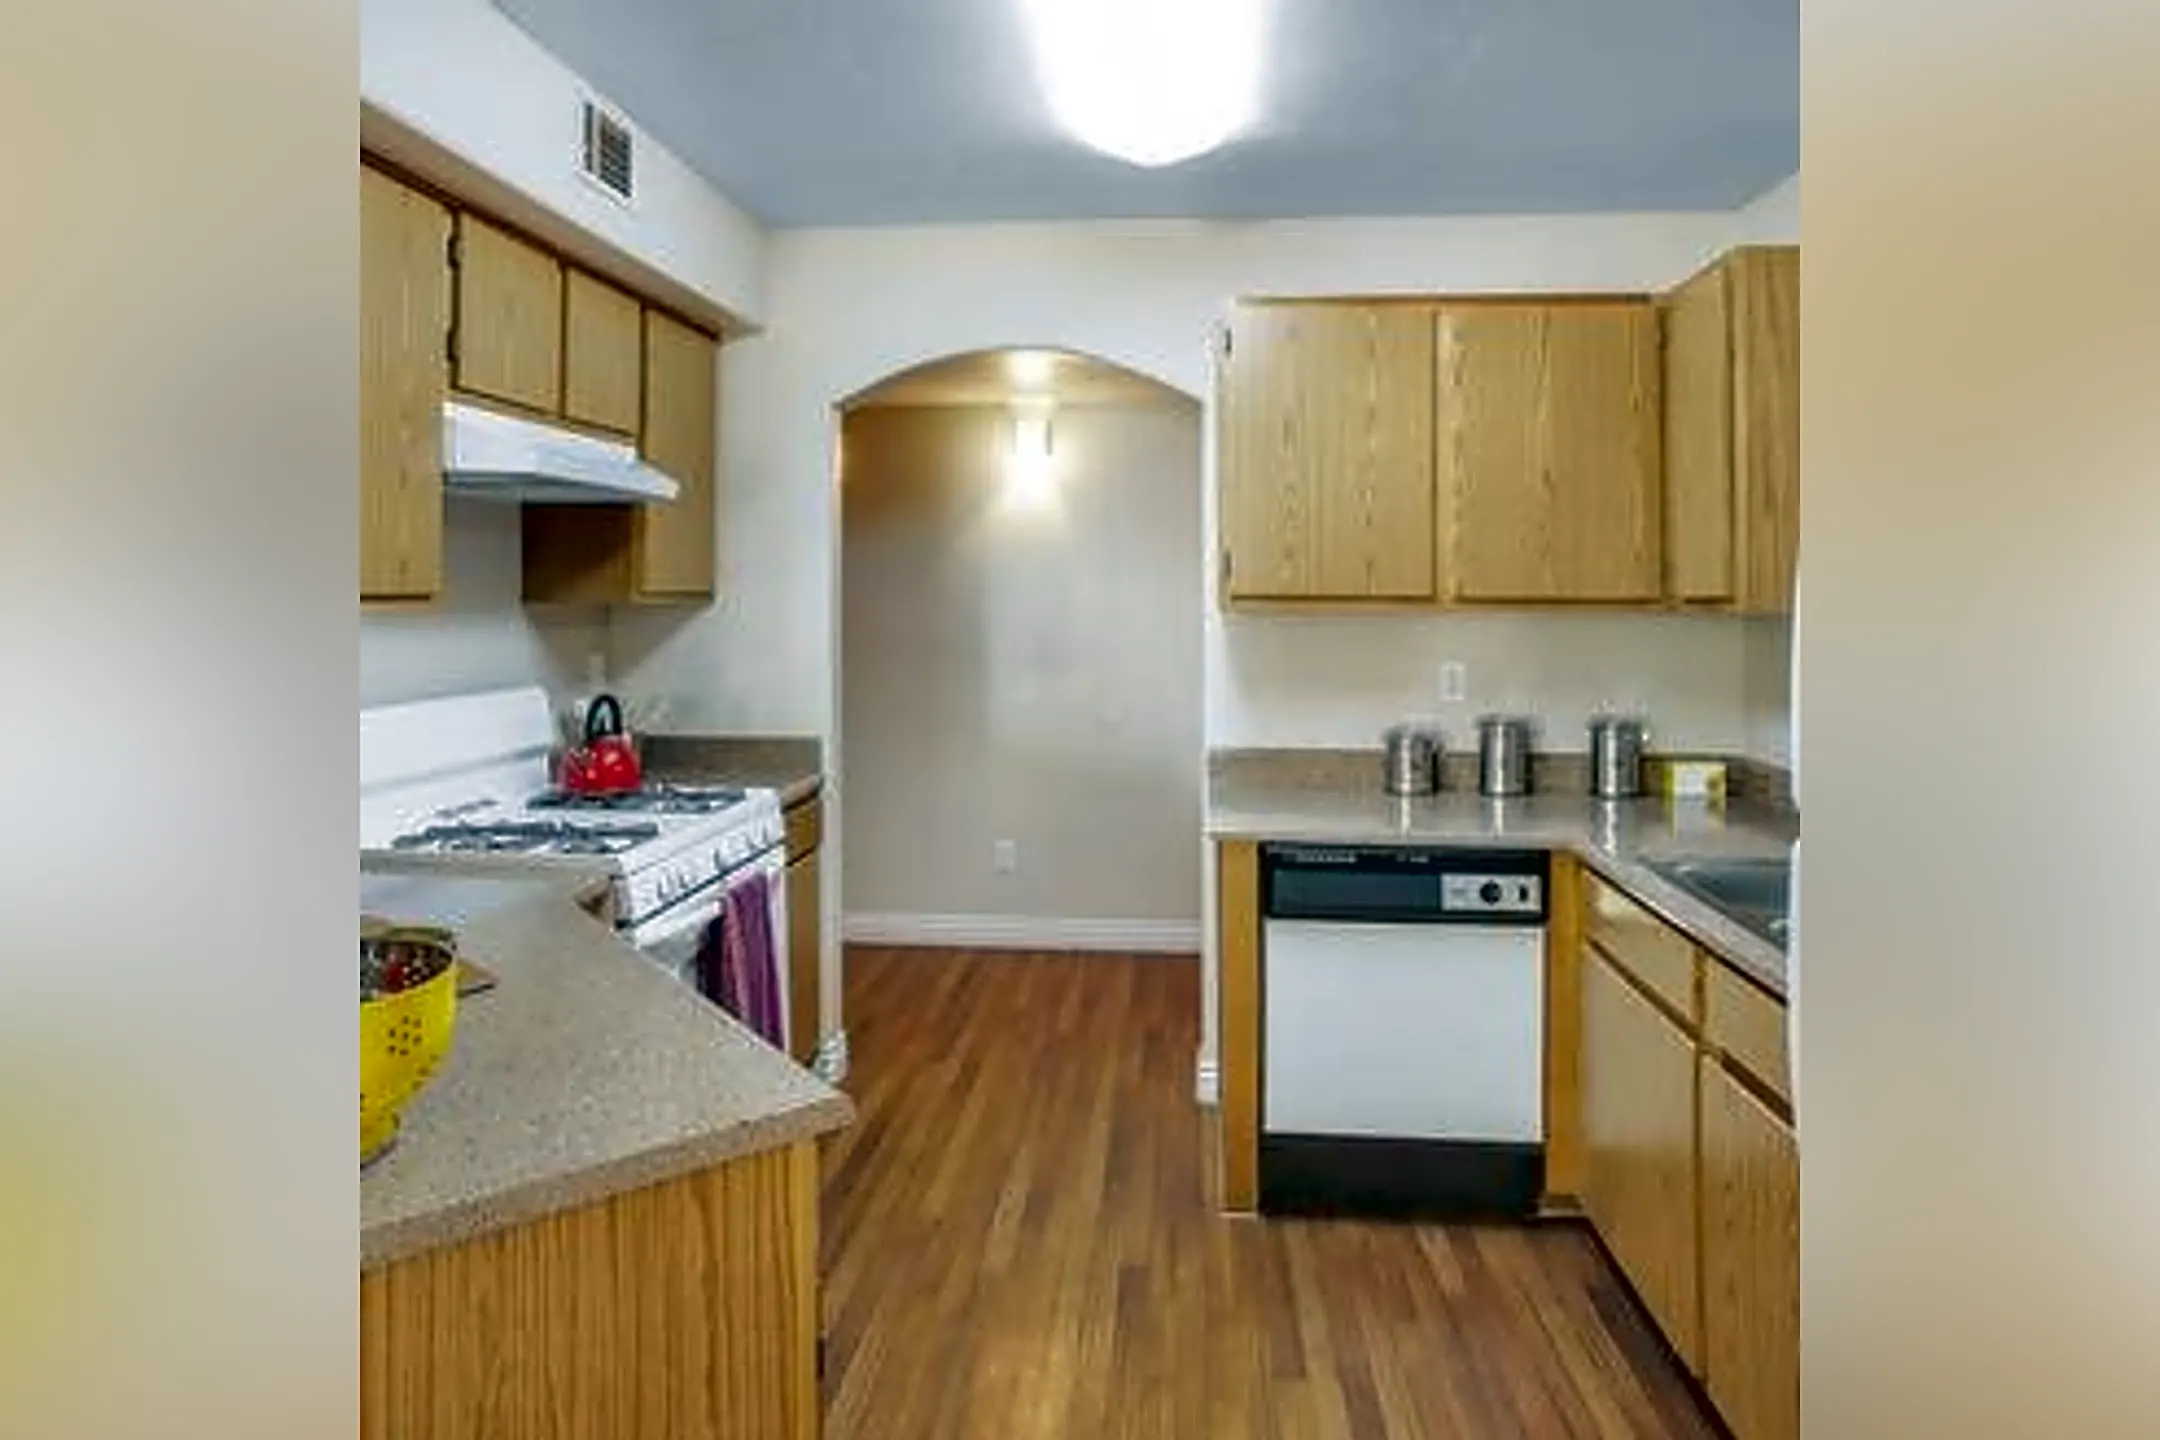 Kitchen - Maravilla Apartments - Las Vegas, NV